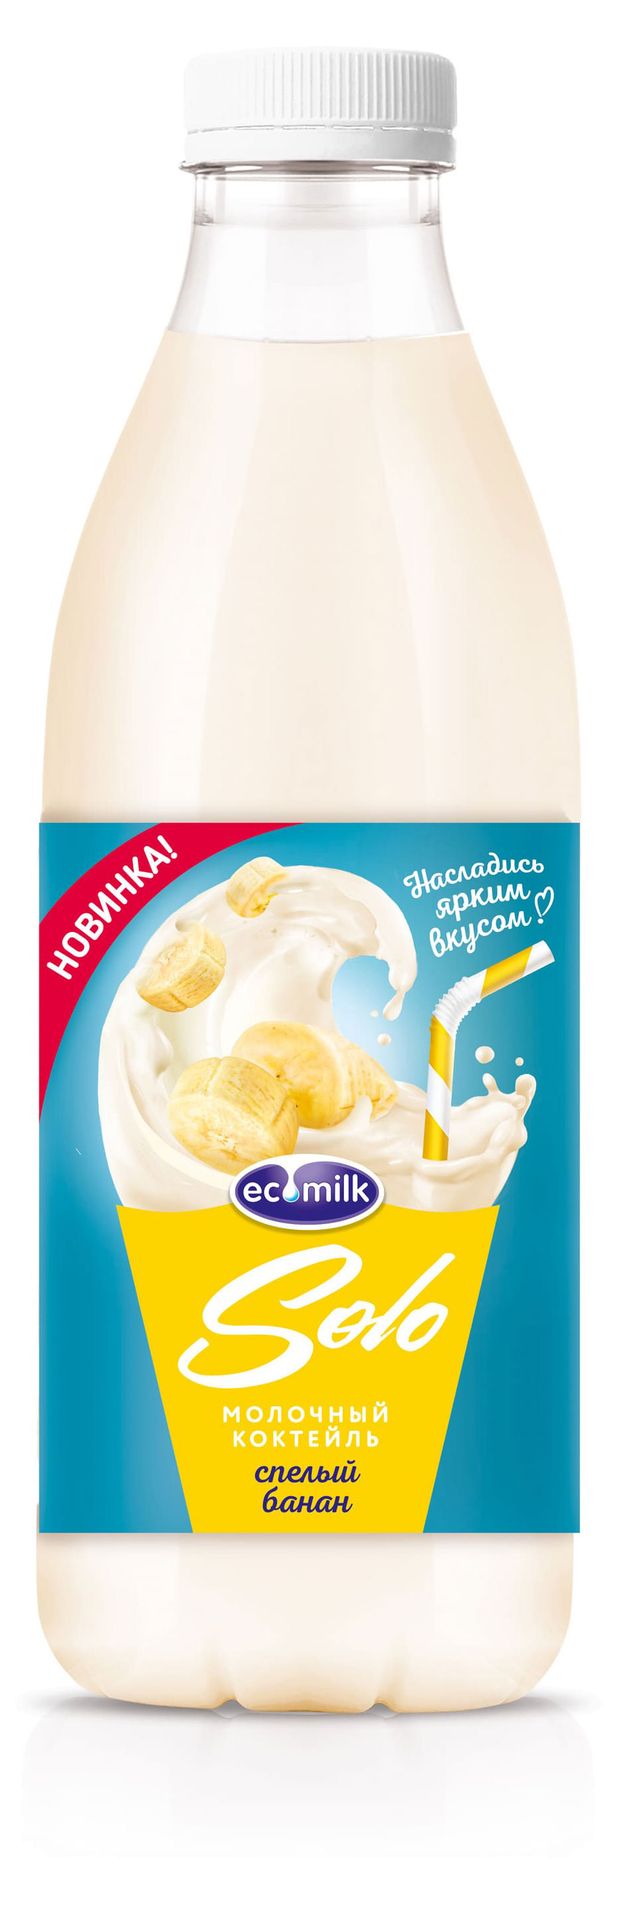 Молочный коктейль Ecomilk.Solo Спелый банан 2% 930 мл